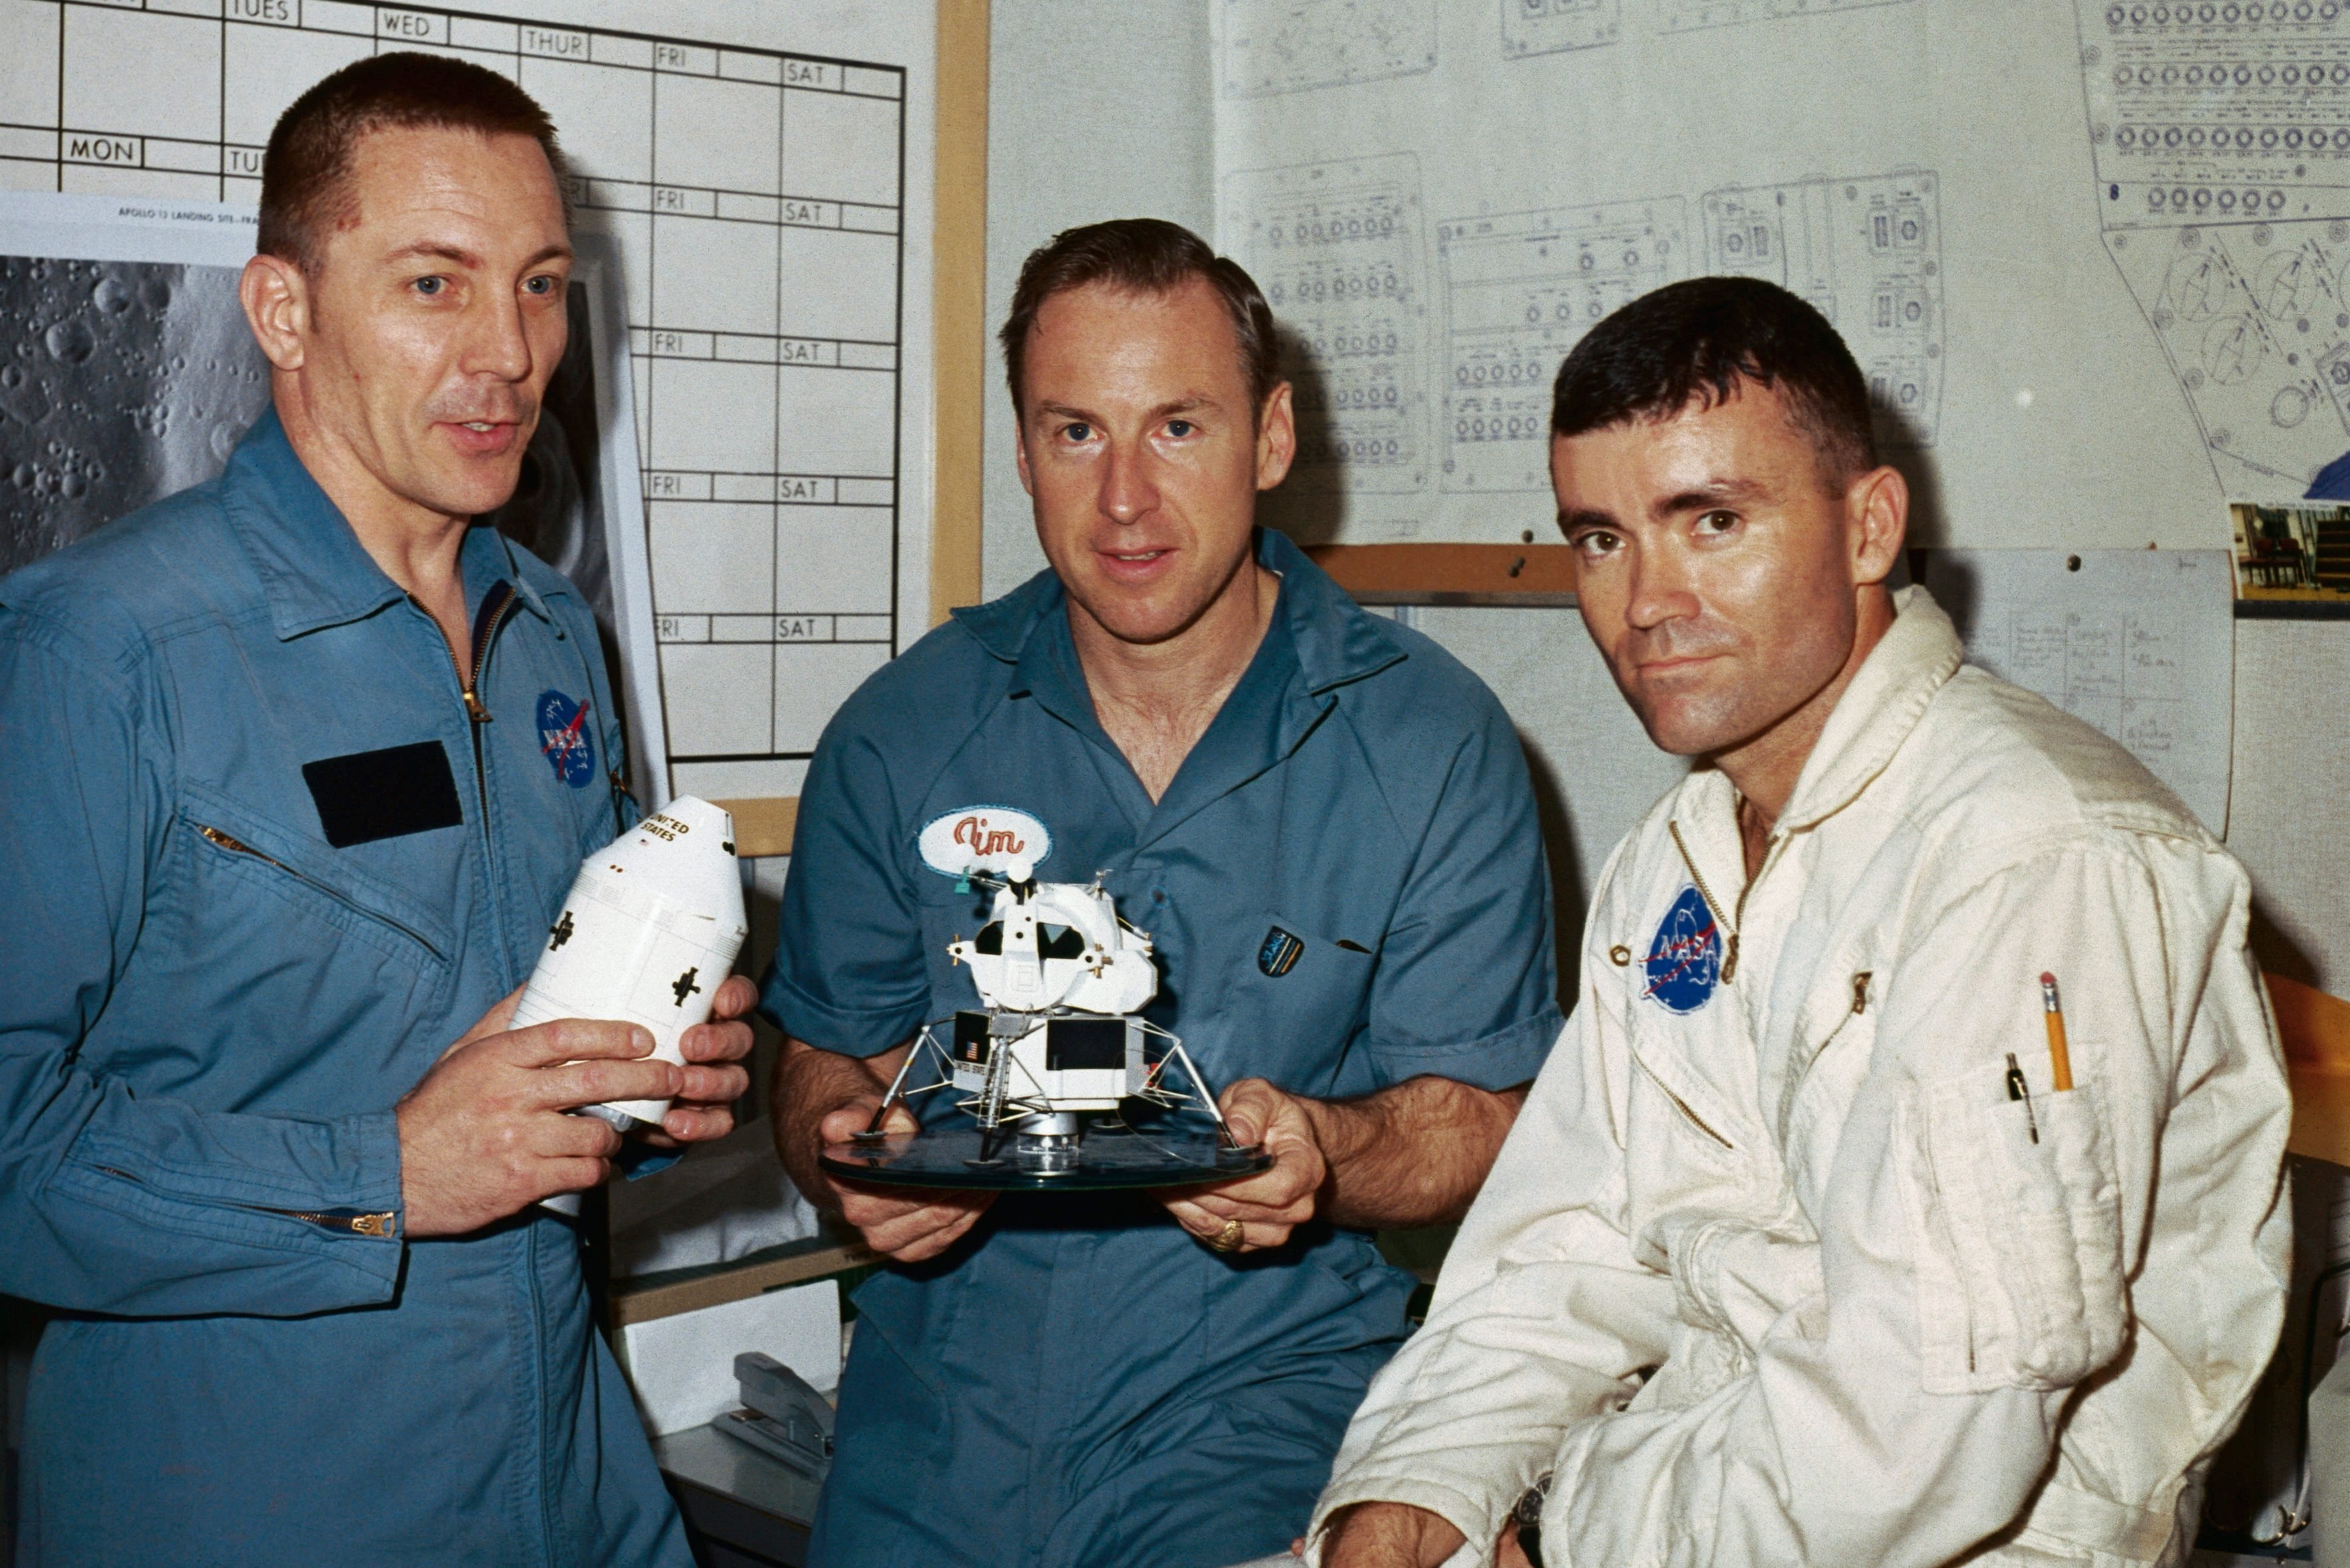 Apollo 13 Astronauts at a Briefing